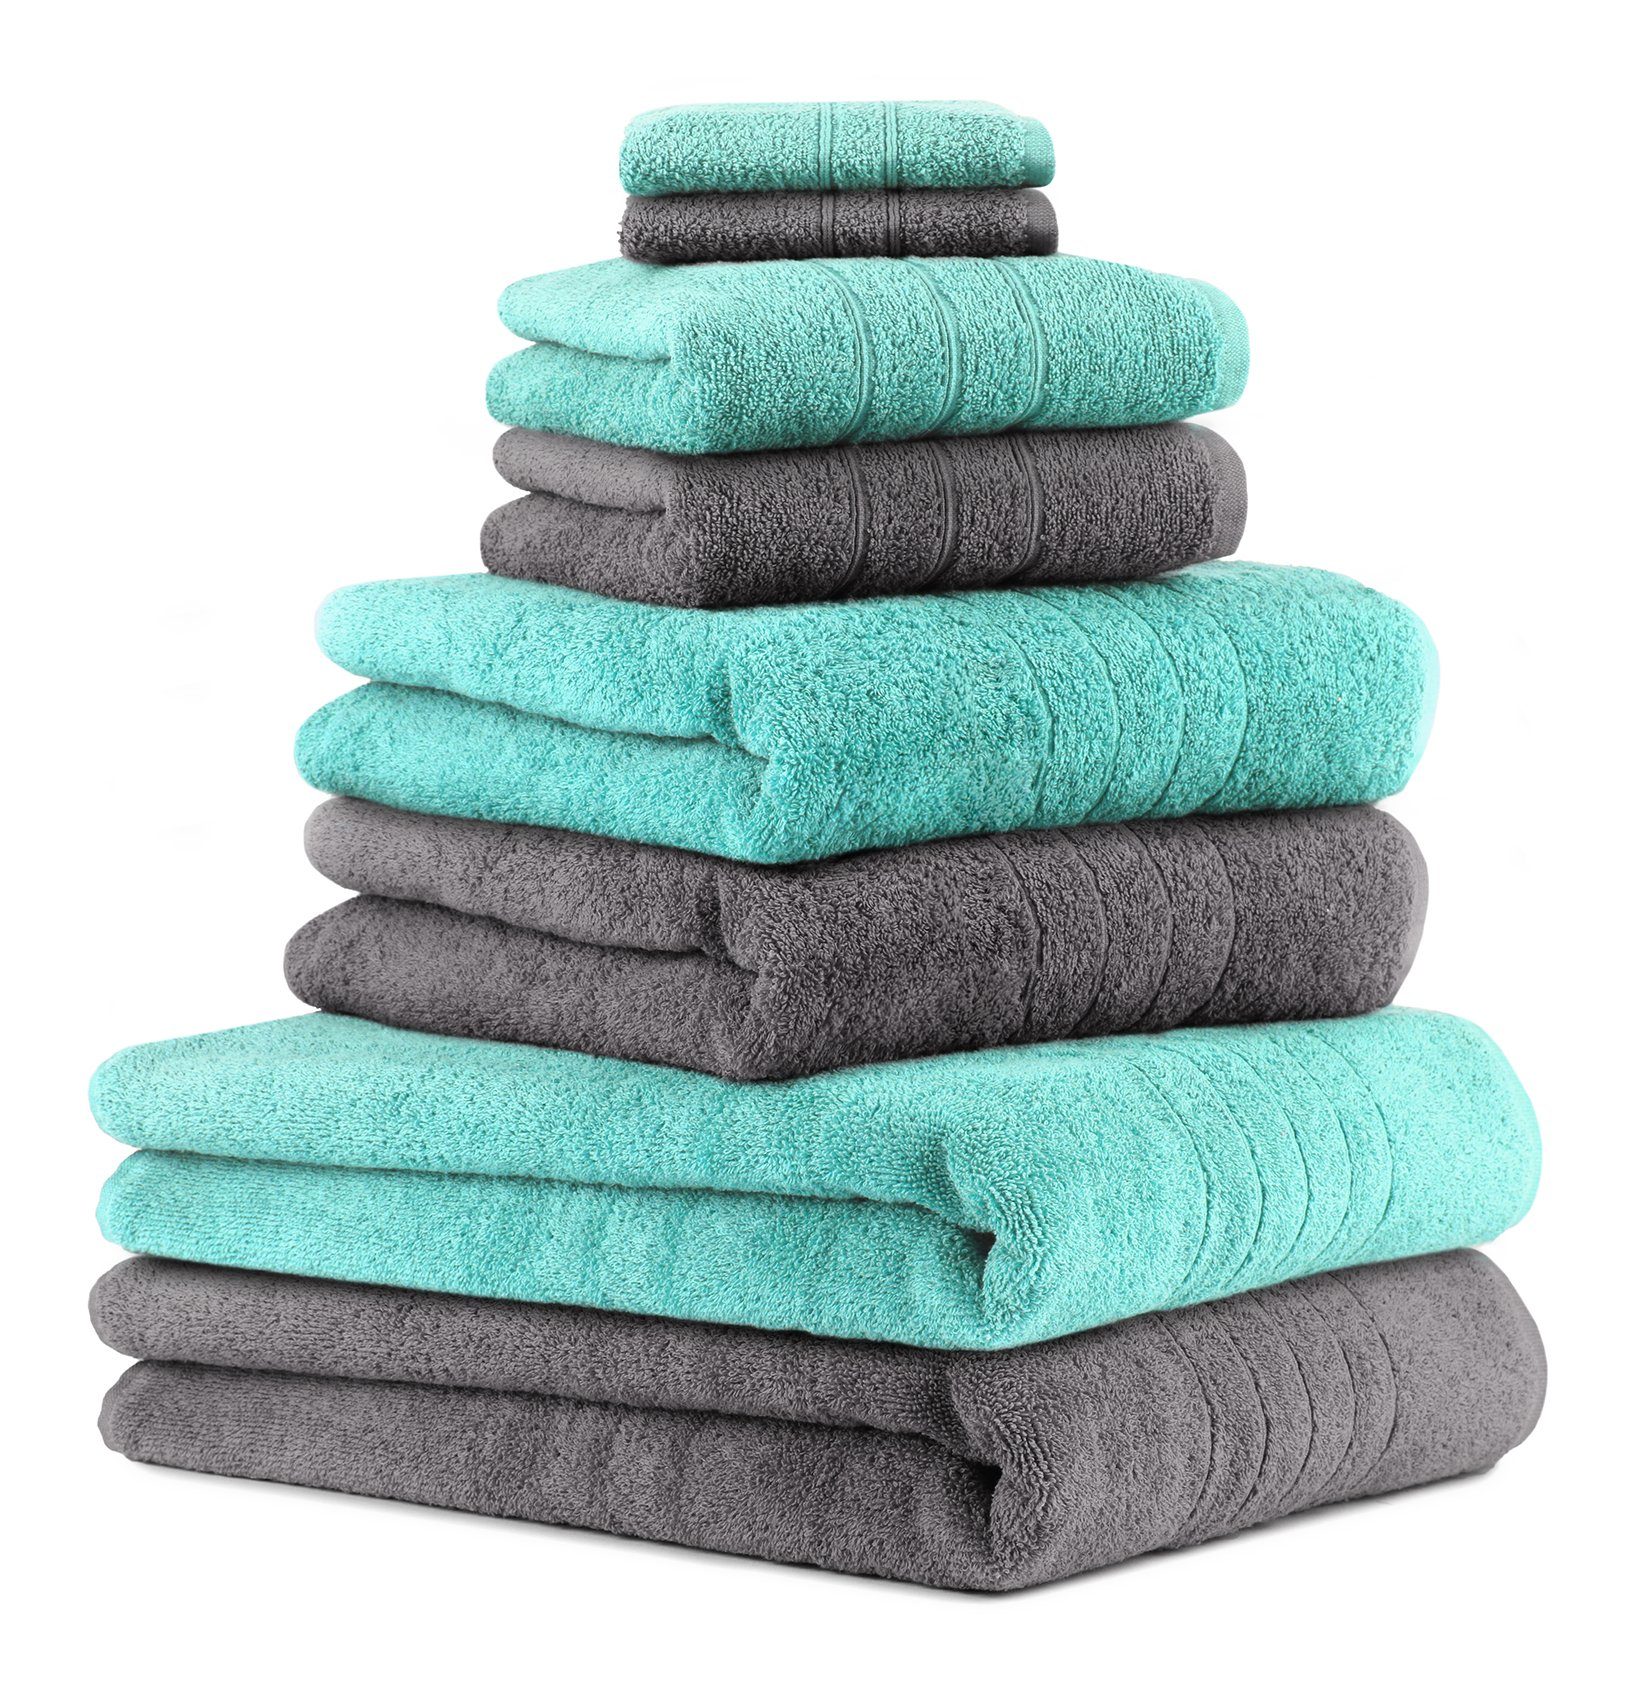 Betz Handtuch Set 2 Seiftücher Baumwolle türkis, 2 anthrazit Handtücher 100% 8-TLG. 2 grau Duschtücher und Deluxe 100% Baumwolle, 2 Handtuch-Set Farbe (8-tlg) Badetücher